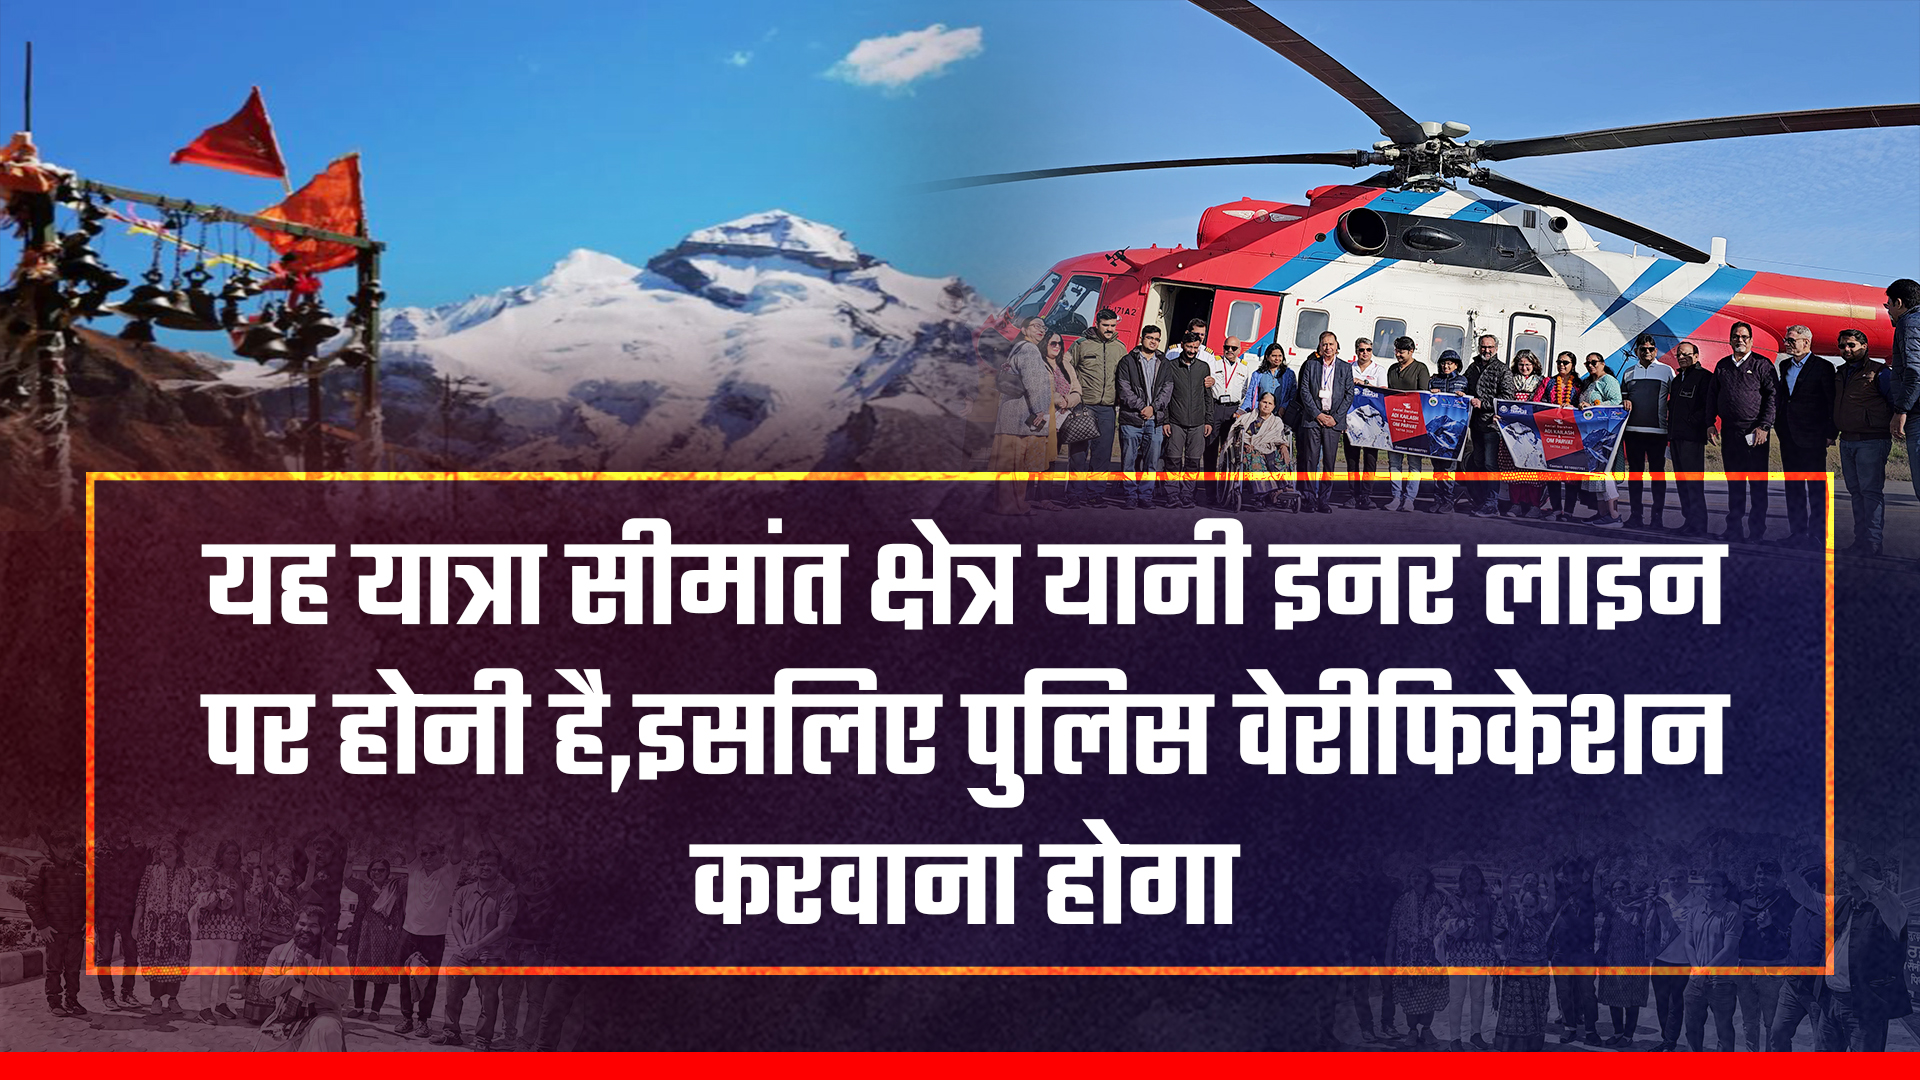 Adi Kailash and Om Parvat winter tourism